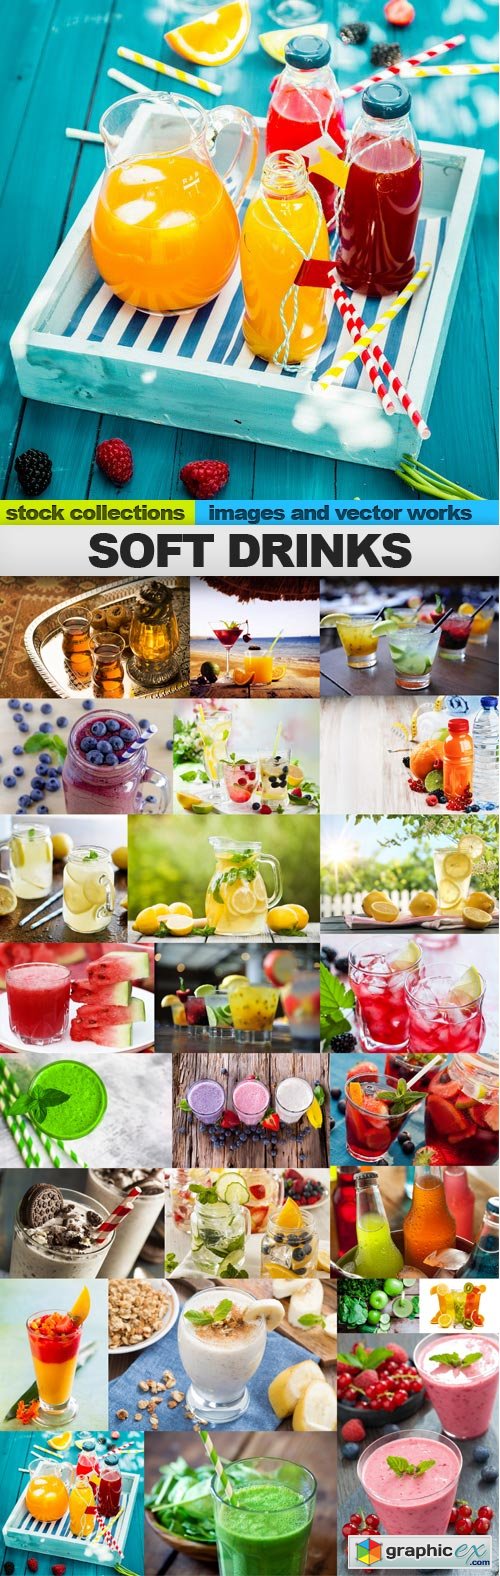 Soft drinks 25xUHQ JPEG